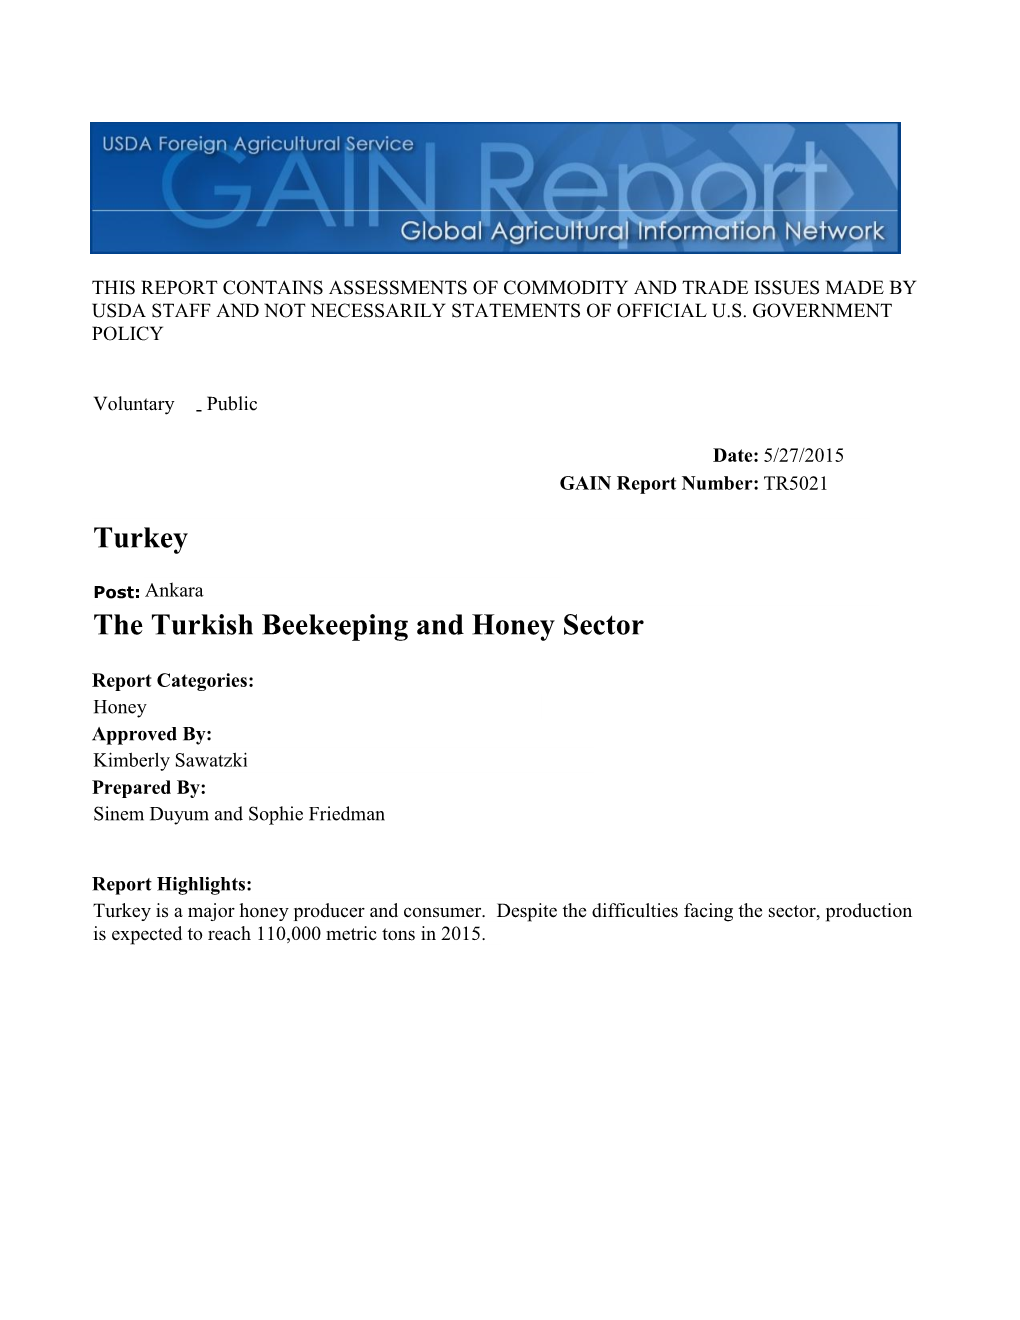 The Turkish Beekeeping and Honey Sector Turkey